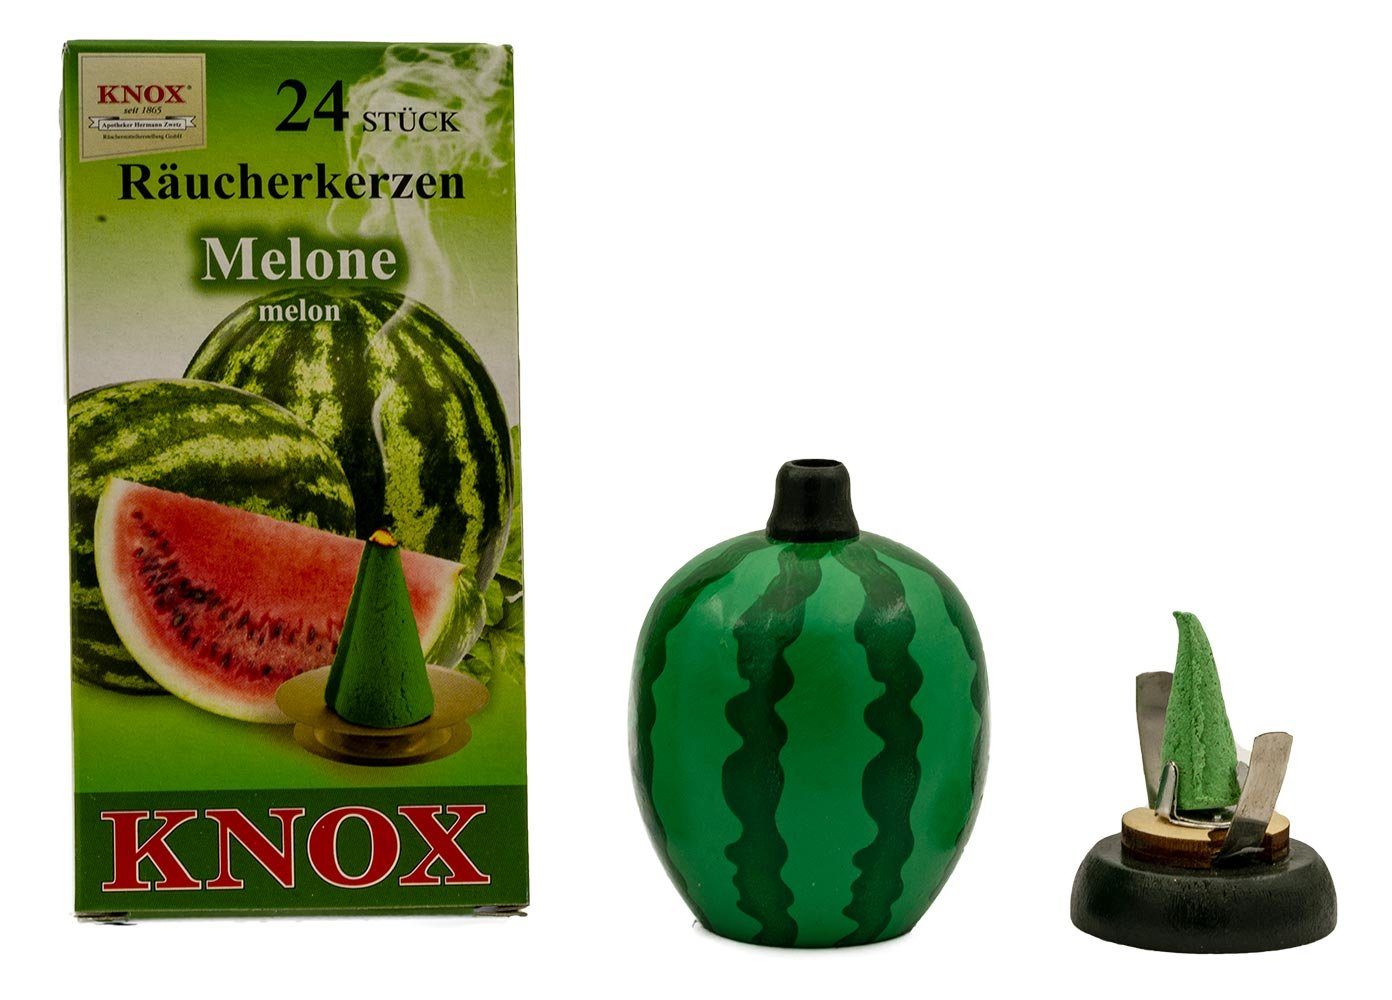 KNOX Räucherhaus Melonen-Set, Melonen-Räucherfigur inkl. Melonen-Duft mit Räucherkerzen 24